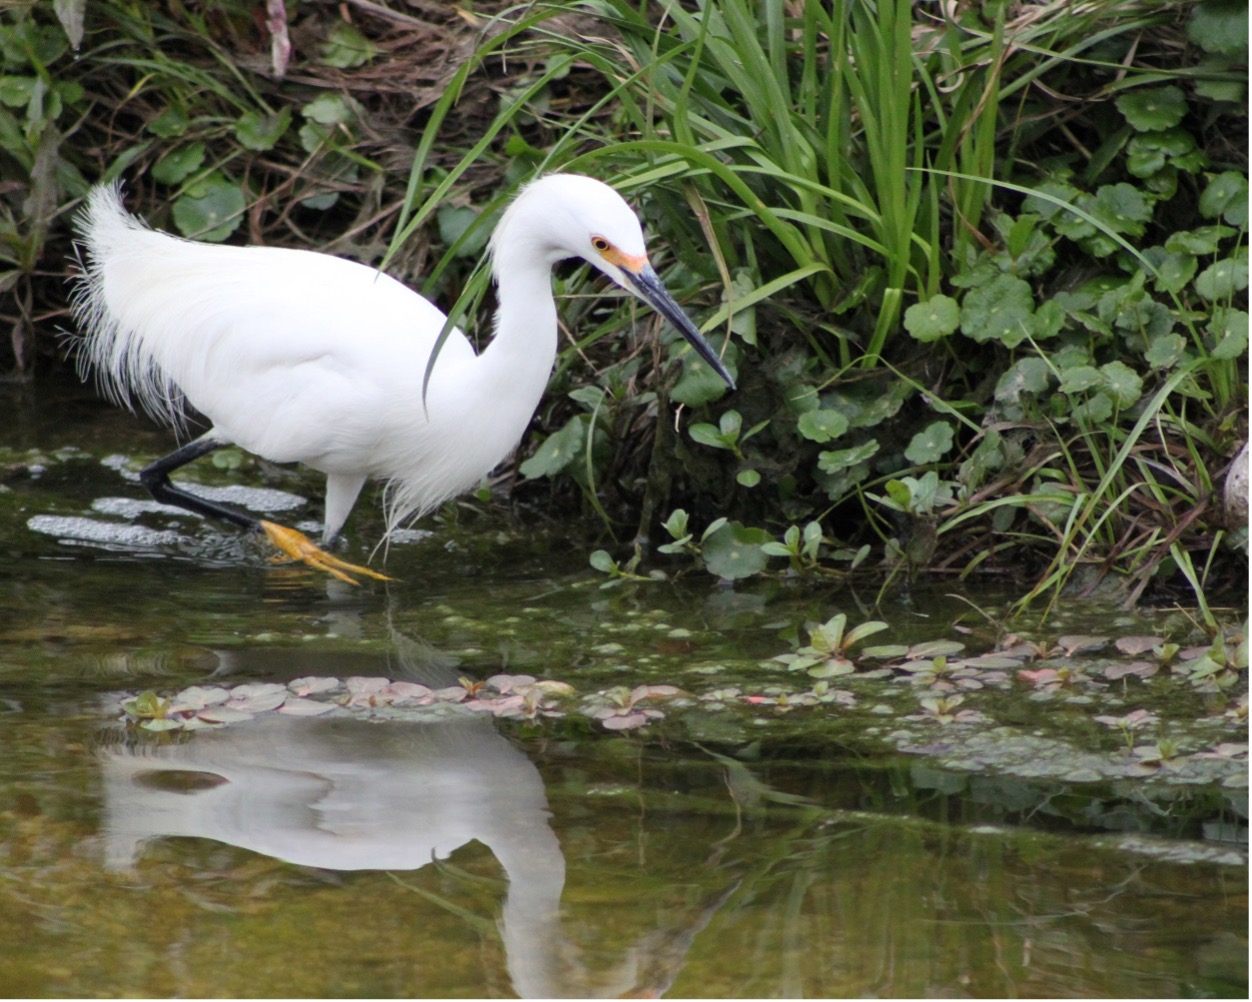 A Snowy egret searches for its prey along Alazán Creek.